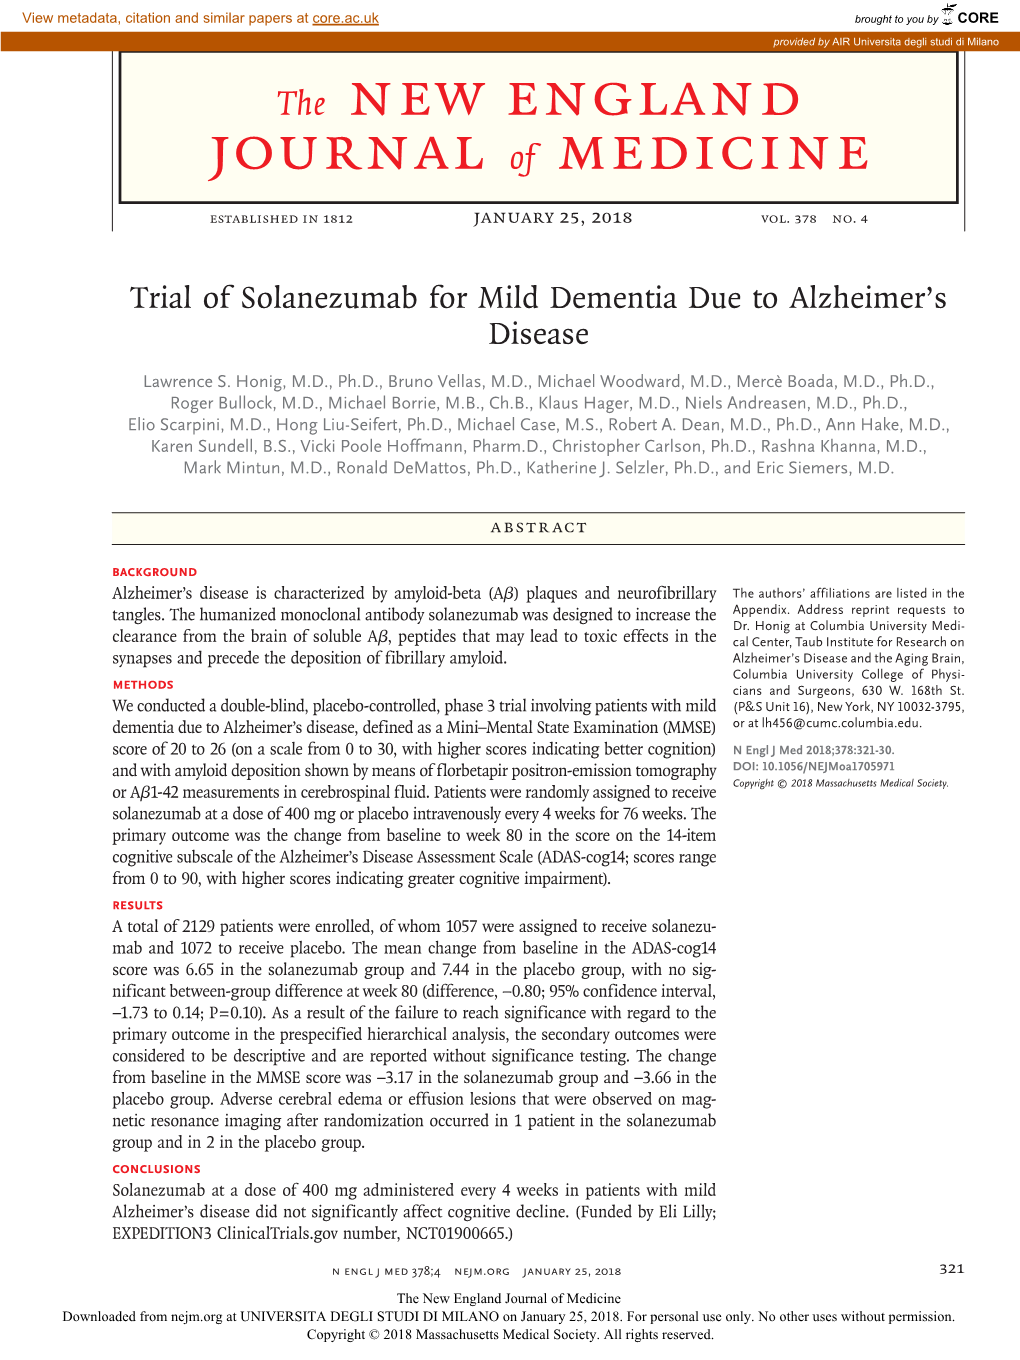 Trial of Solanezumab for Mild Dementia Due to Alzheimer’S Disease